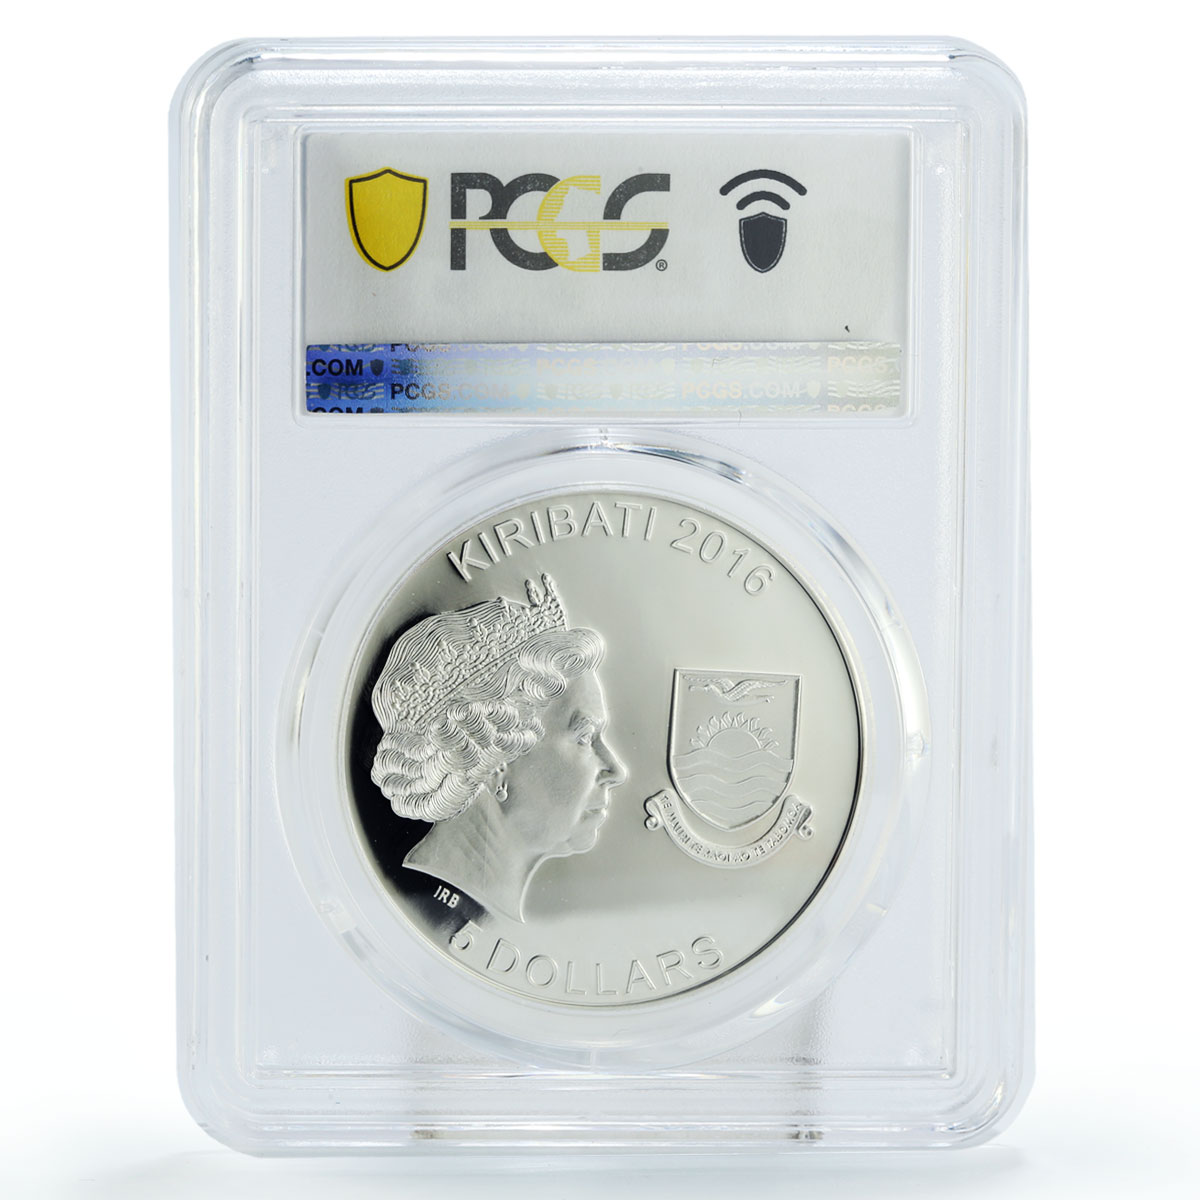 Kiribati 5 dollars Crypt Werewolf Wolfman PR70 PCGS colored silver coin 2016